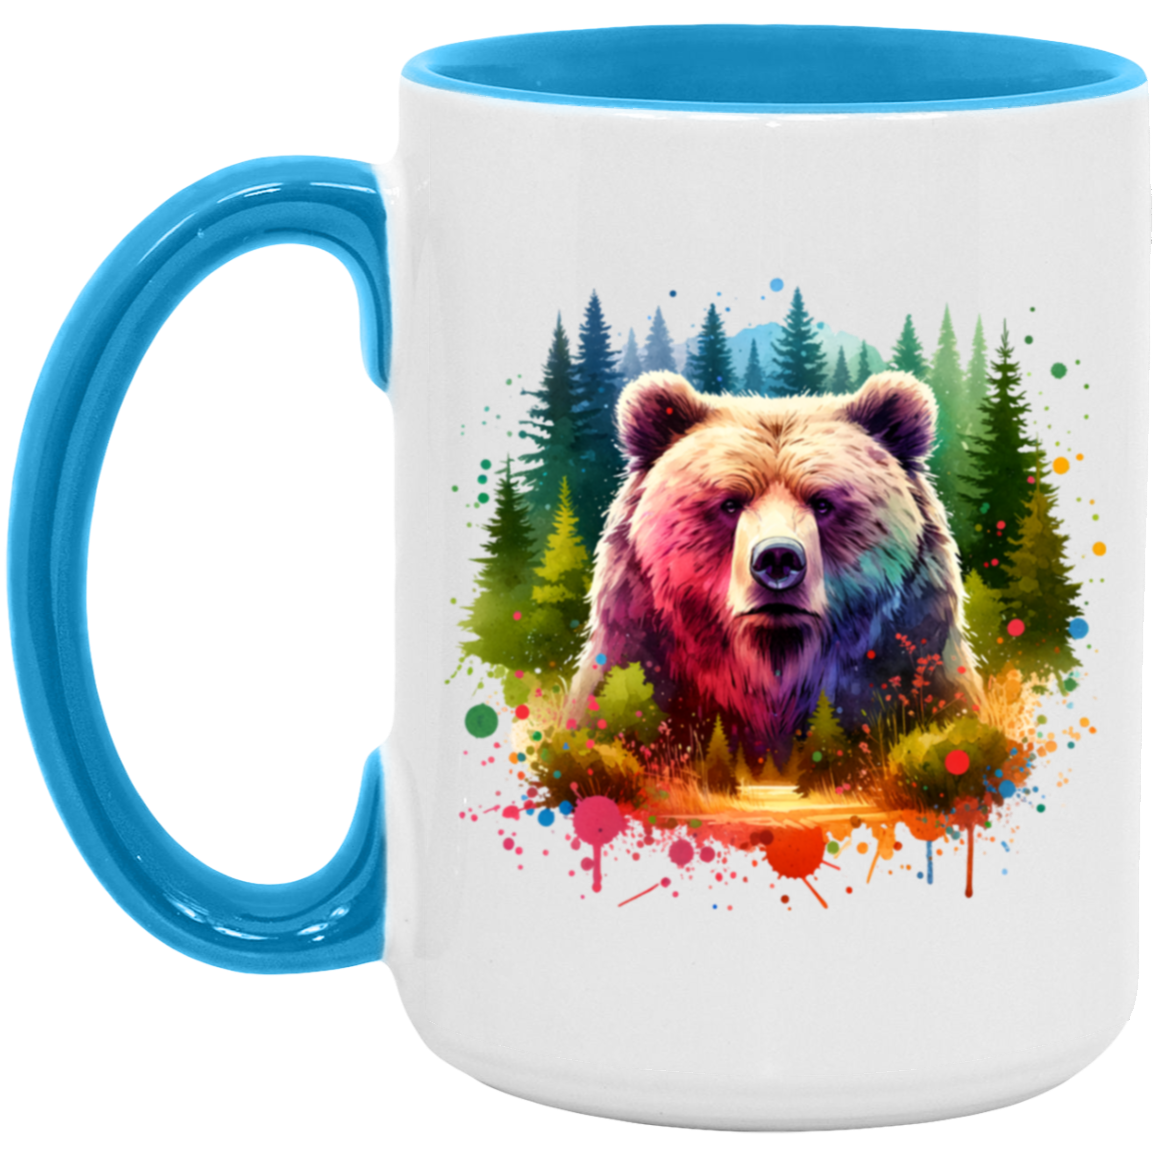 Grizzly Bear Portrait - Mugs